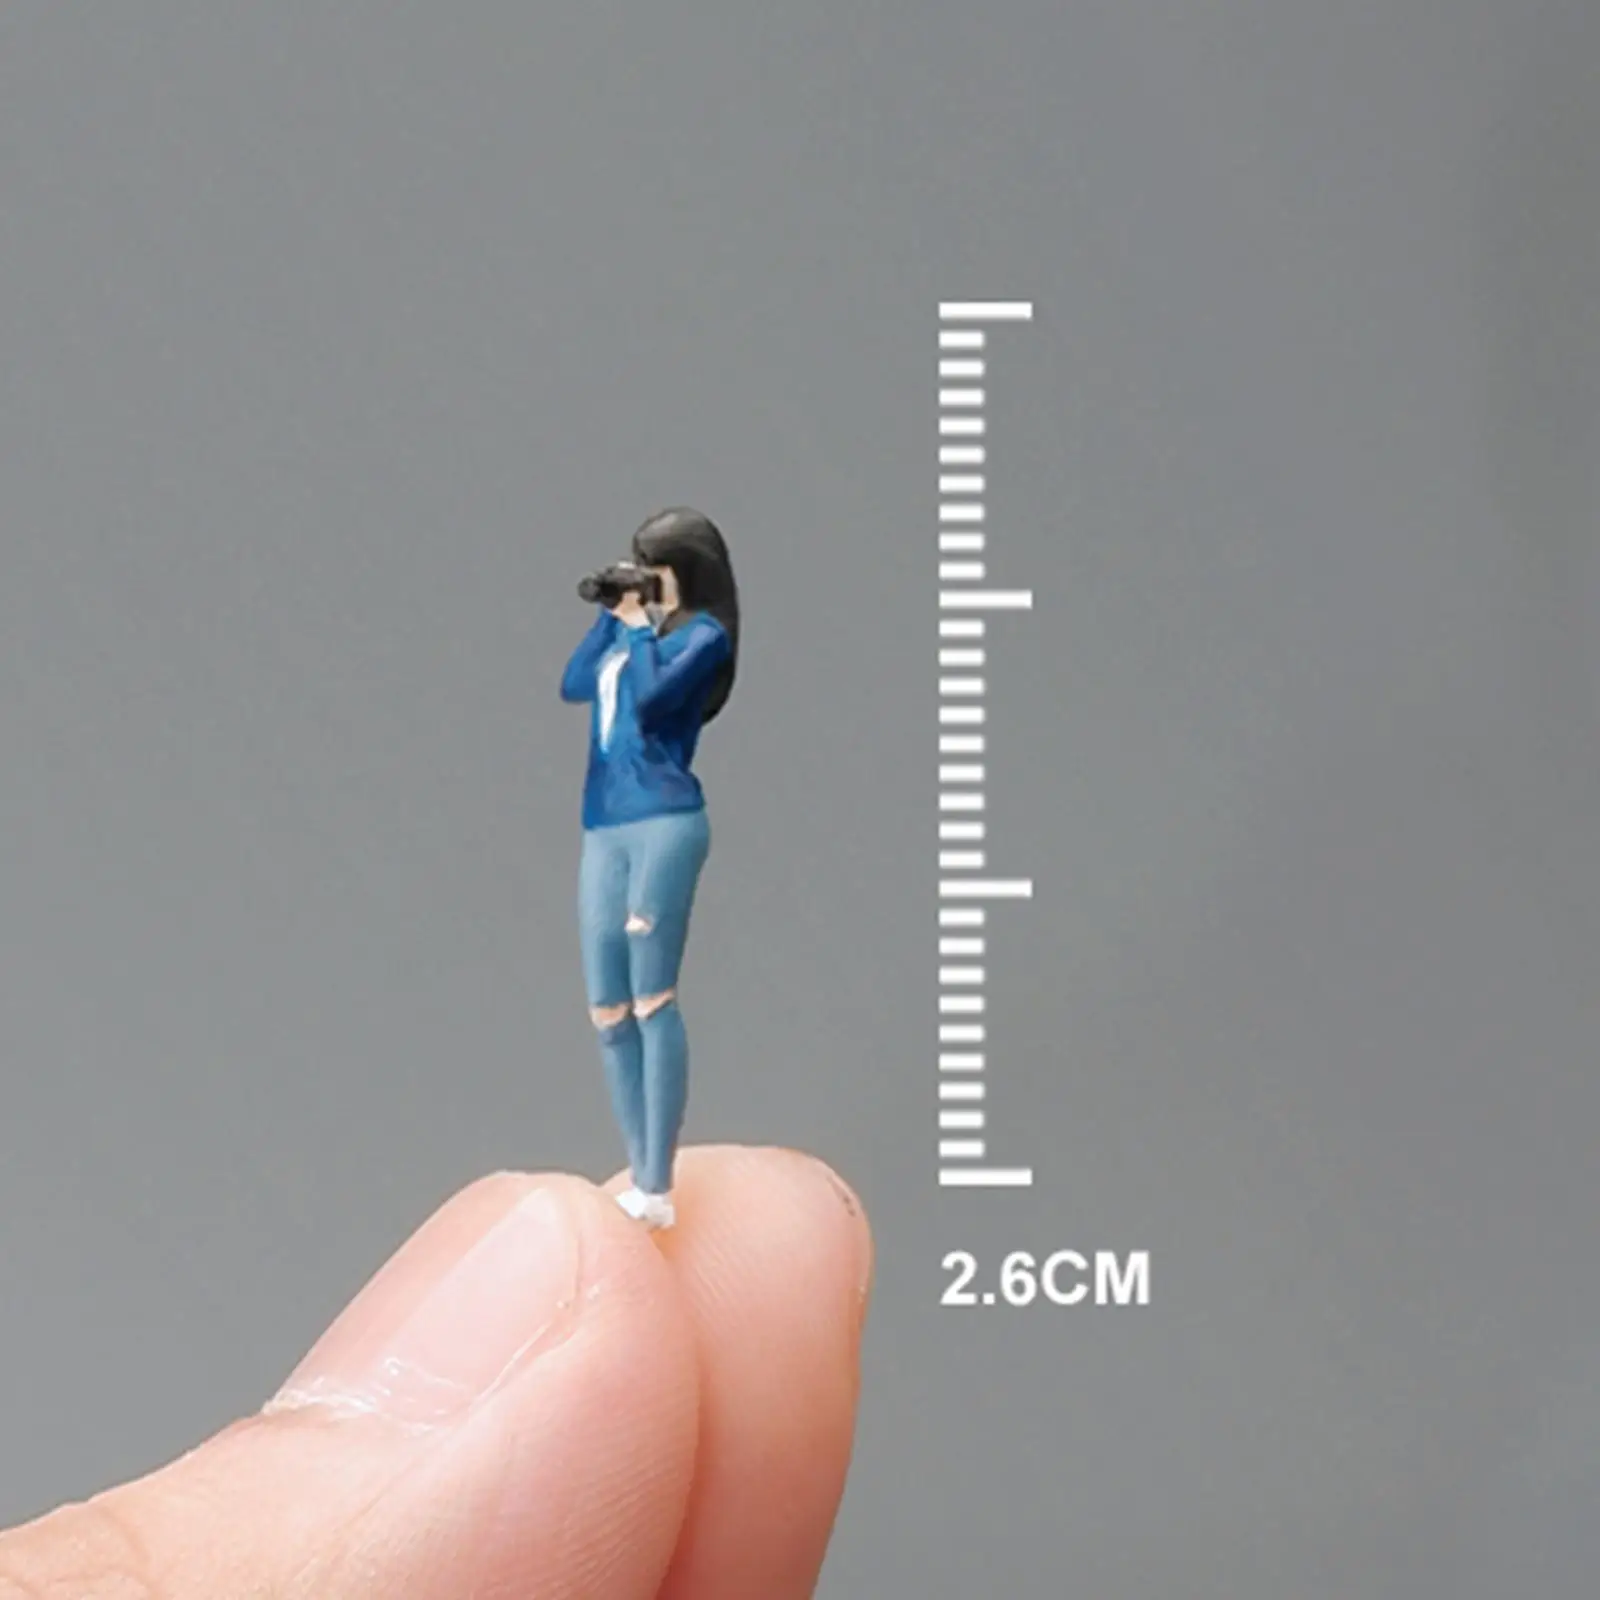 1/64 Scale Diorama Figure Resin Miniature Layout for Model Building Kits Micro Landscape Doll House Decoration Desktop Ornament